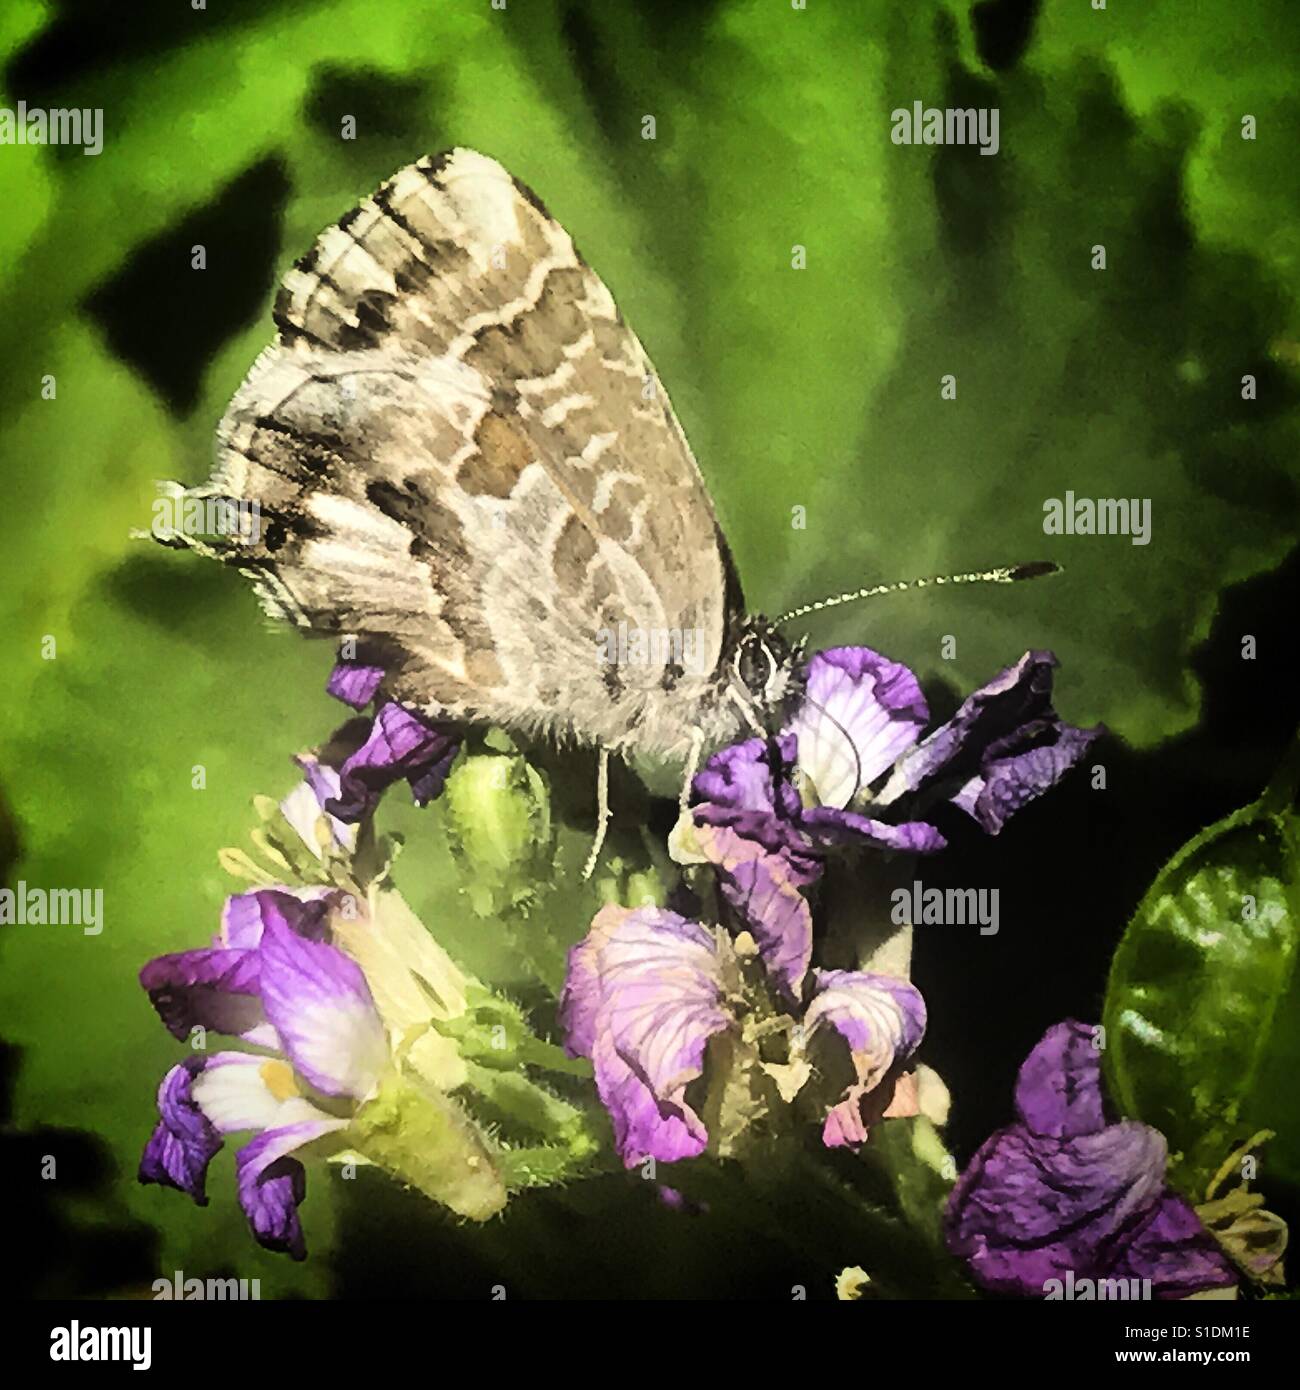 A butterfly pollinates a flowers in Prado del Rey, Sierra de Cadiz, Andalusia, Spain Stock Photo